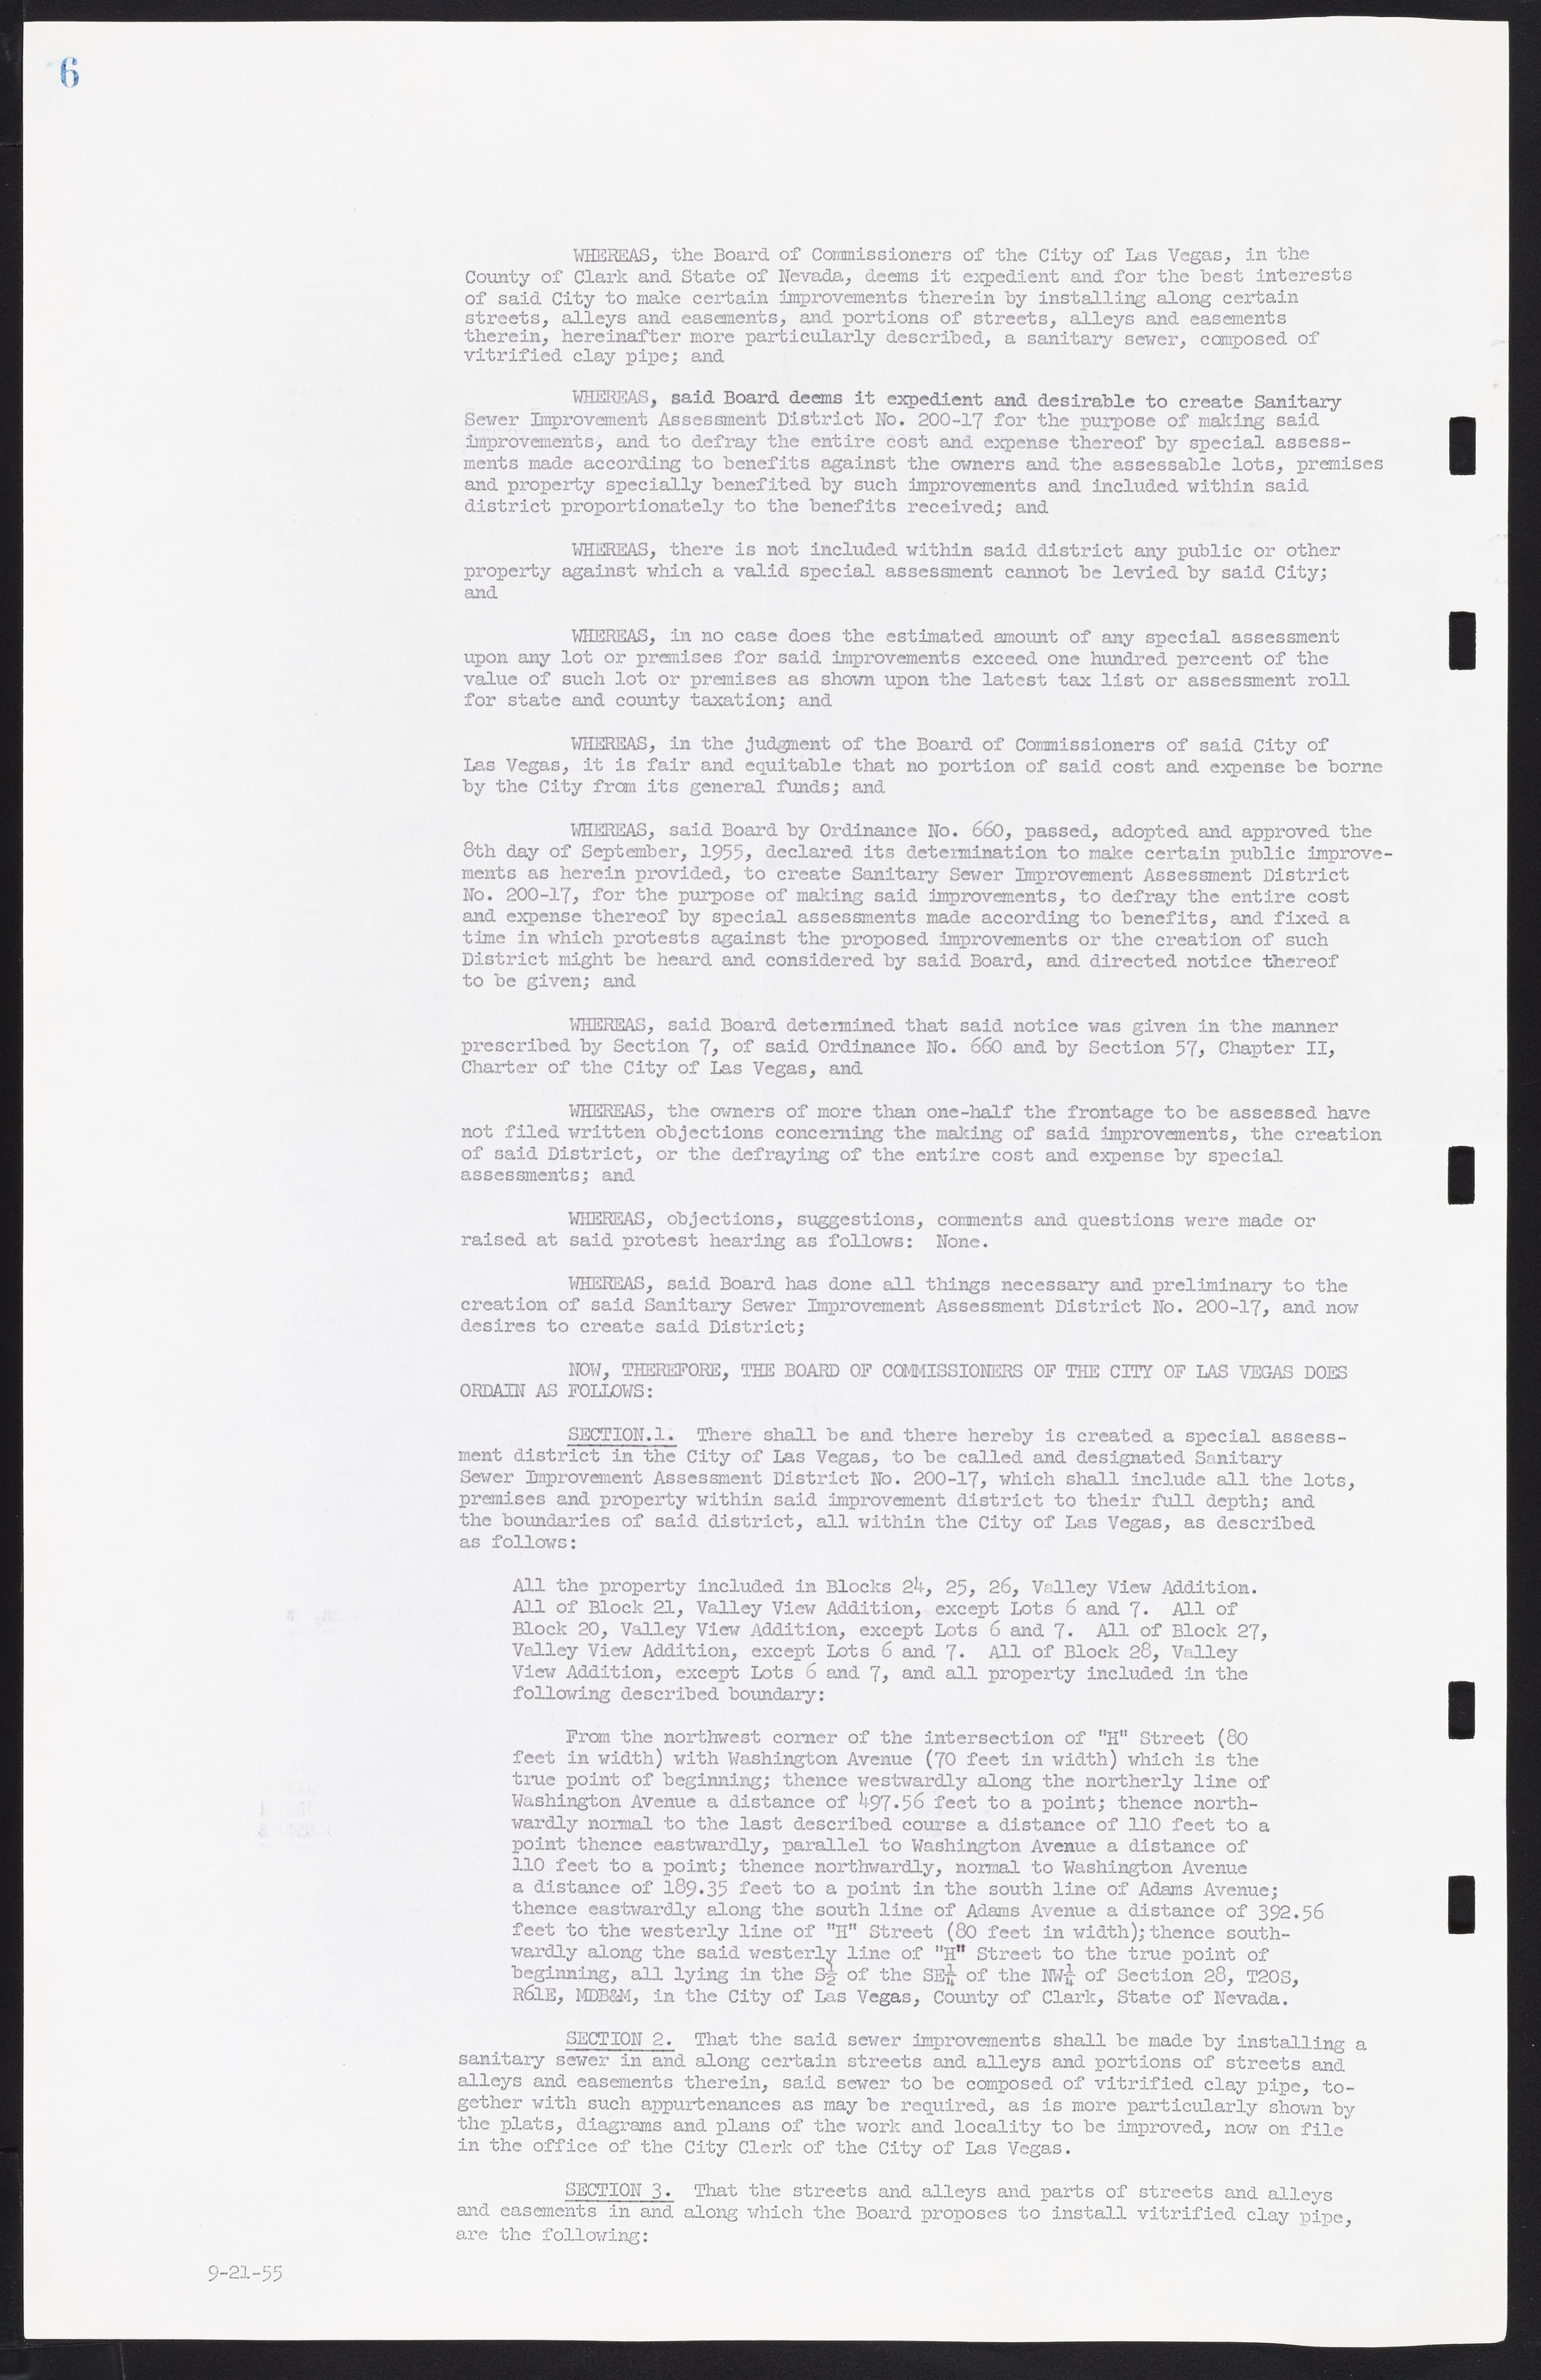 Las Vegas City Commission Minutes, September 21, 1955 to November 20, 1957, lvc000010-12